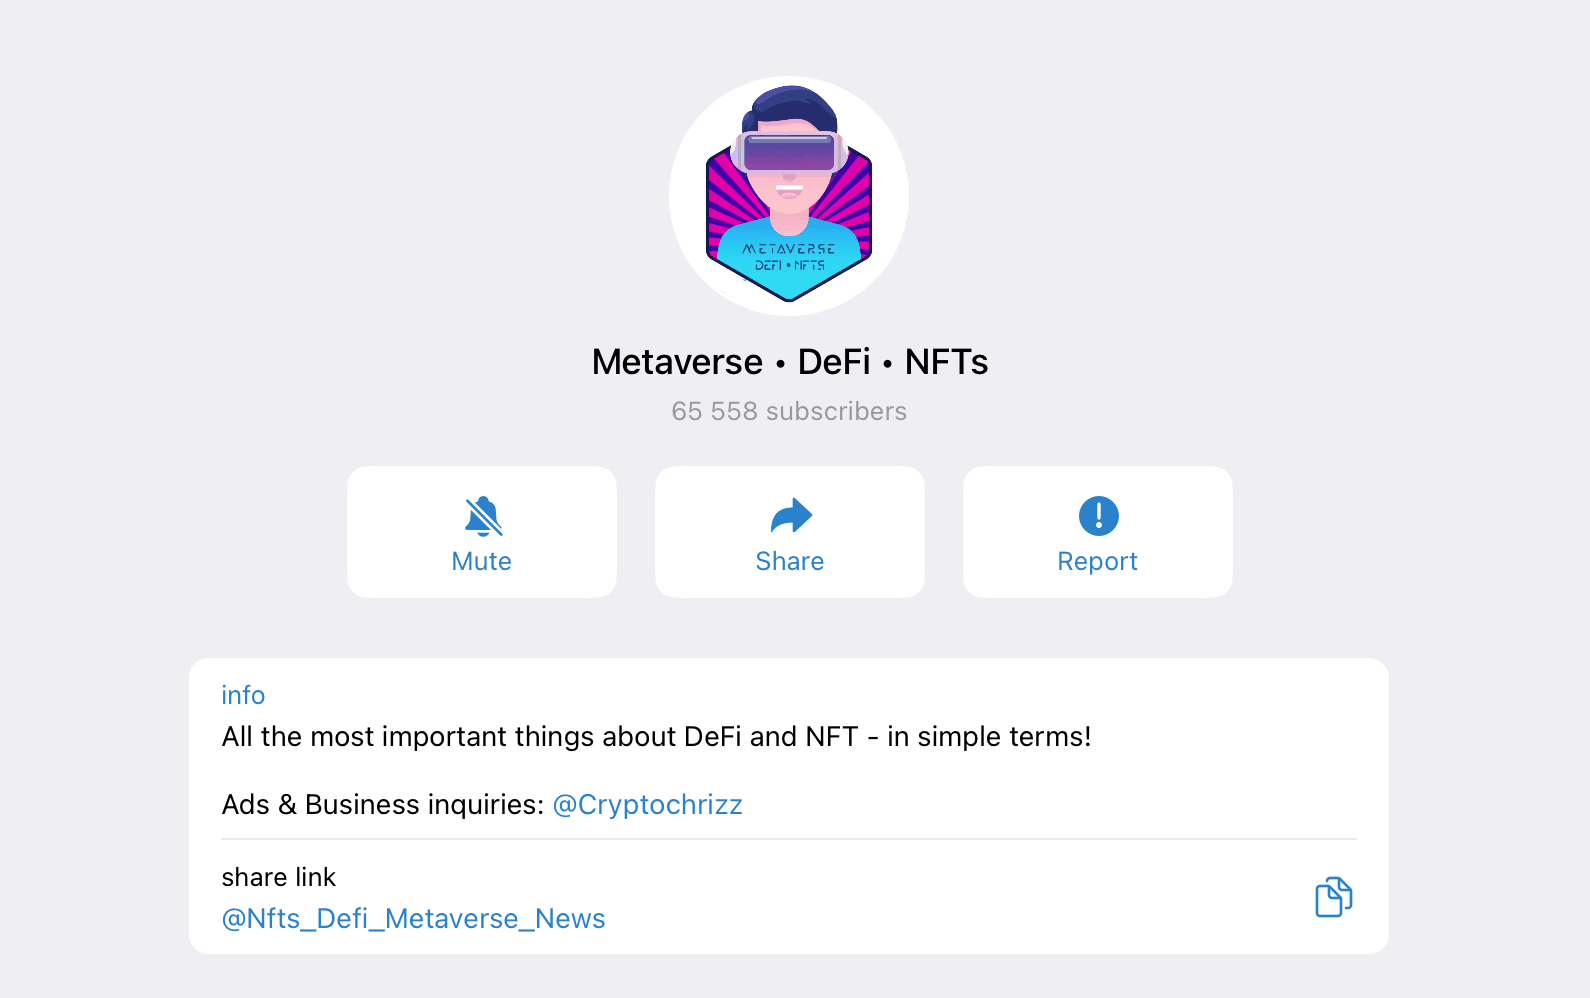 Metaverse • DeFi • NFTs